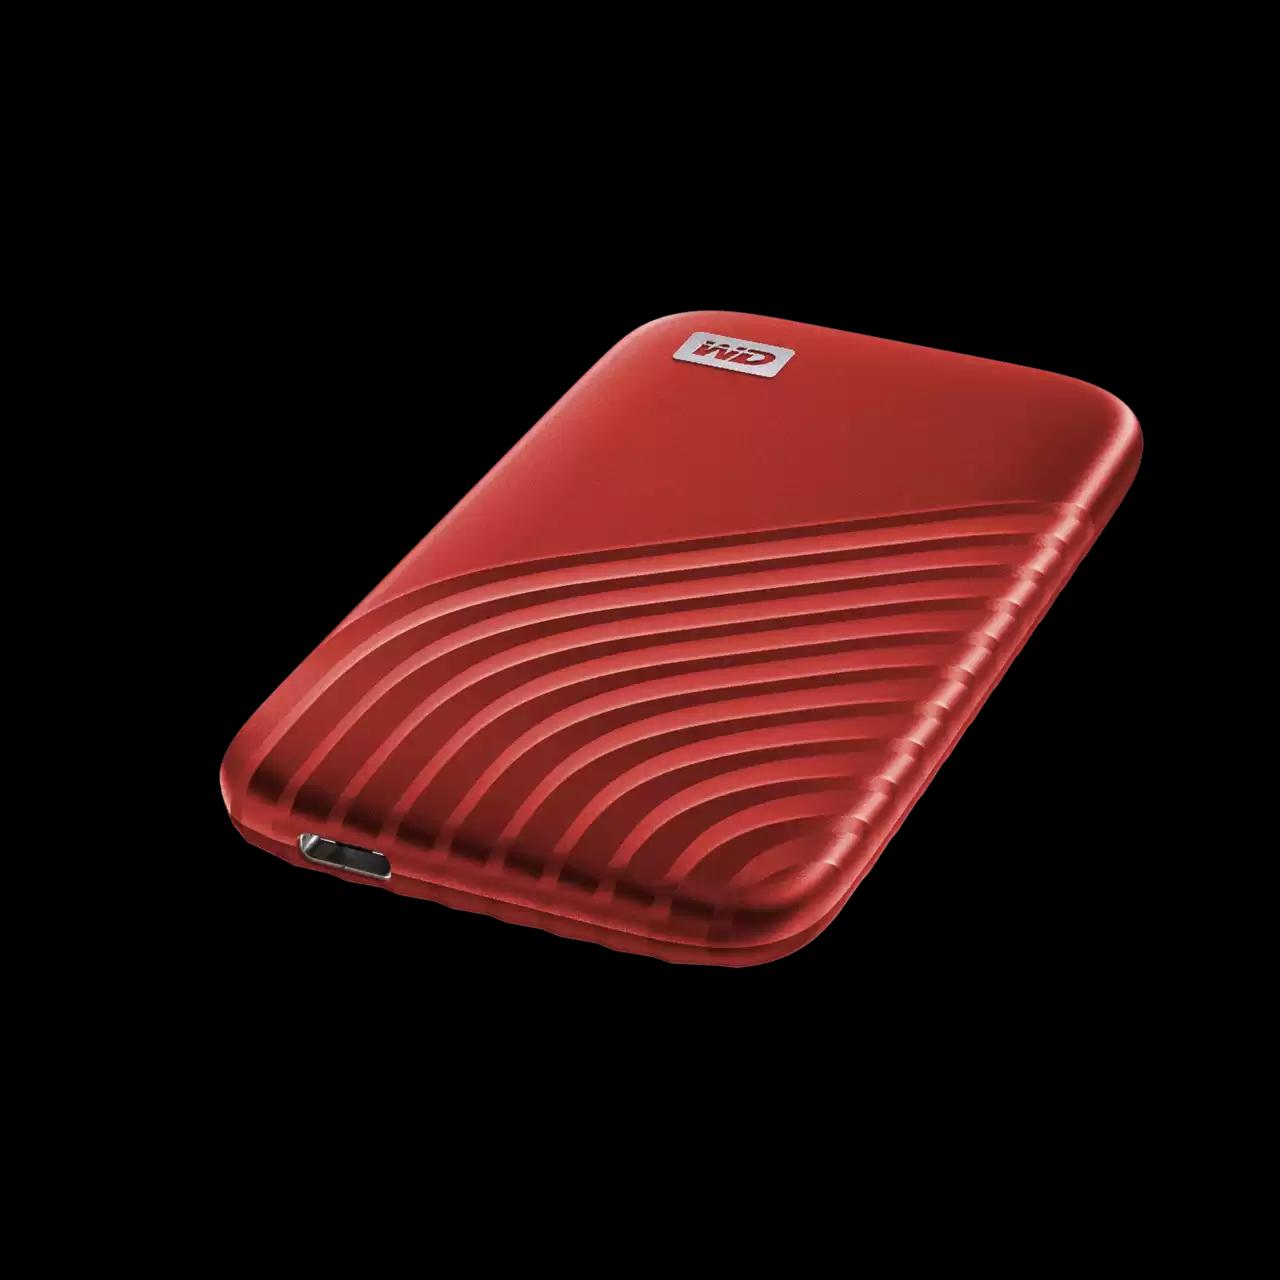 WESTERN DIGITAL WD MY PASSPORT SSD 500GB RED